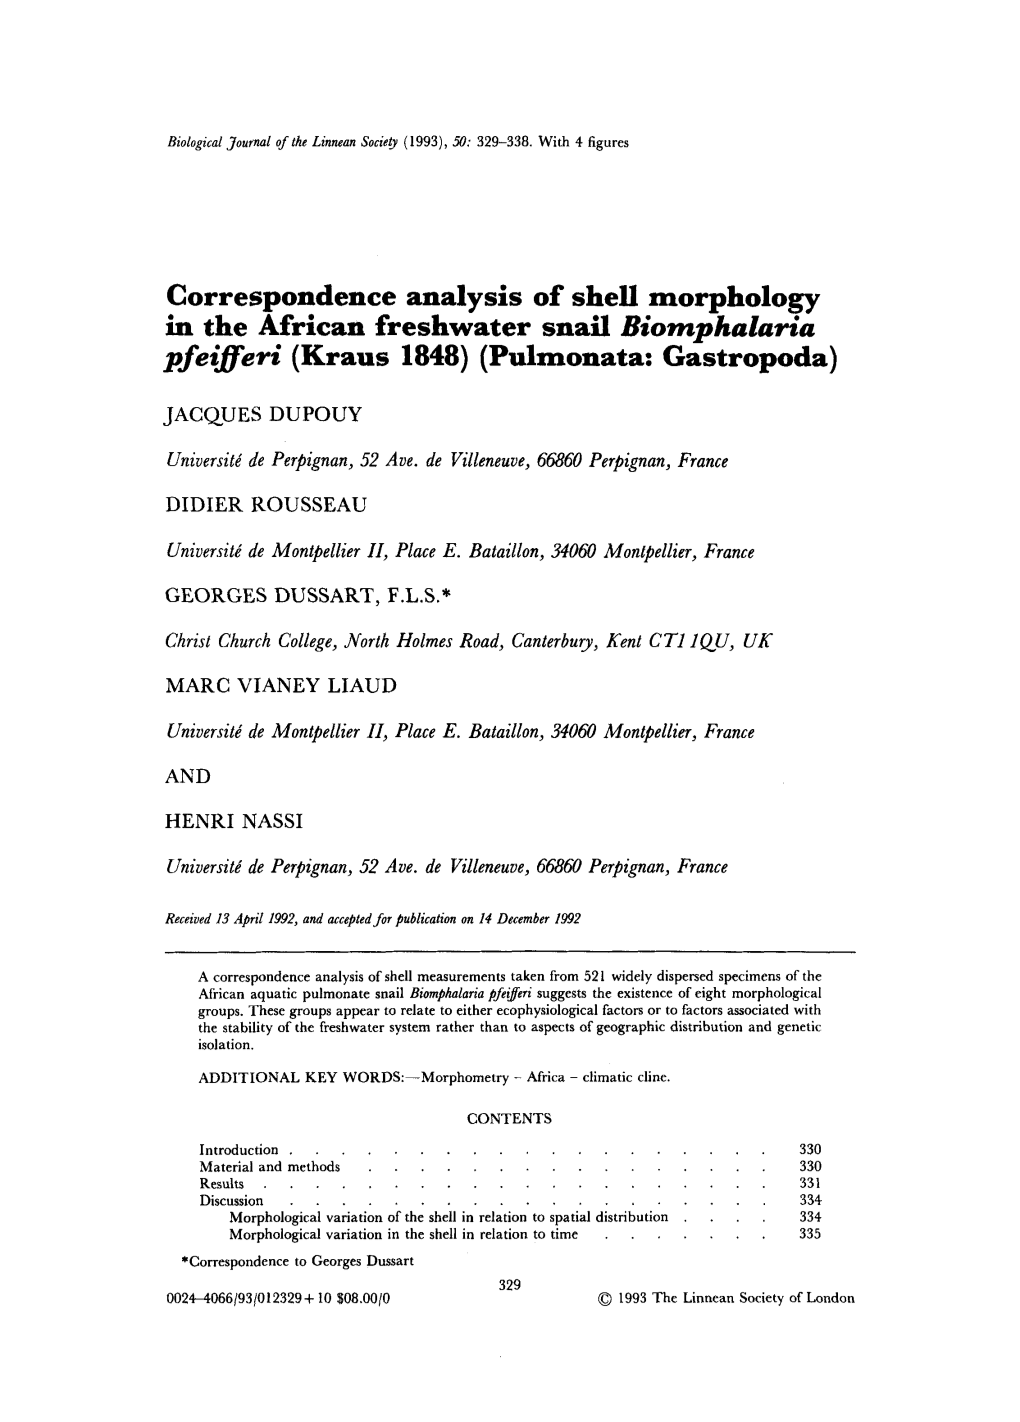 Correspondence Analysis of Shell Morphology in the African Freshwater Snail Biomphalaria Pfeifferi